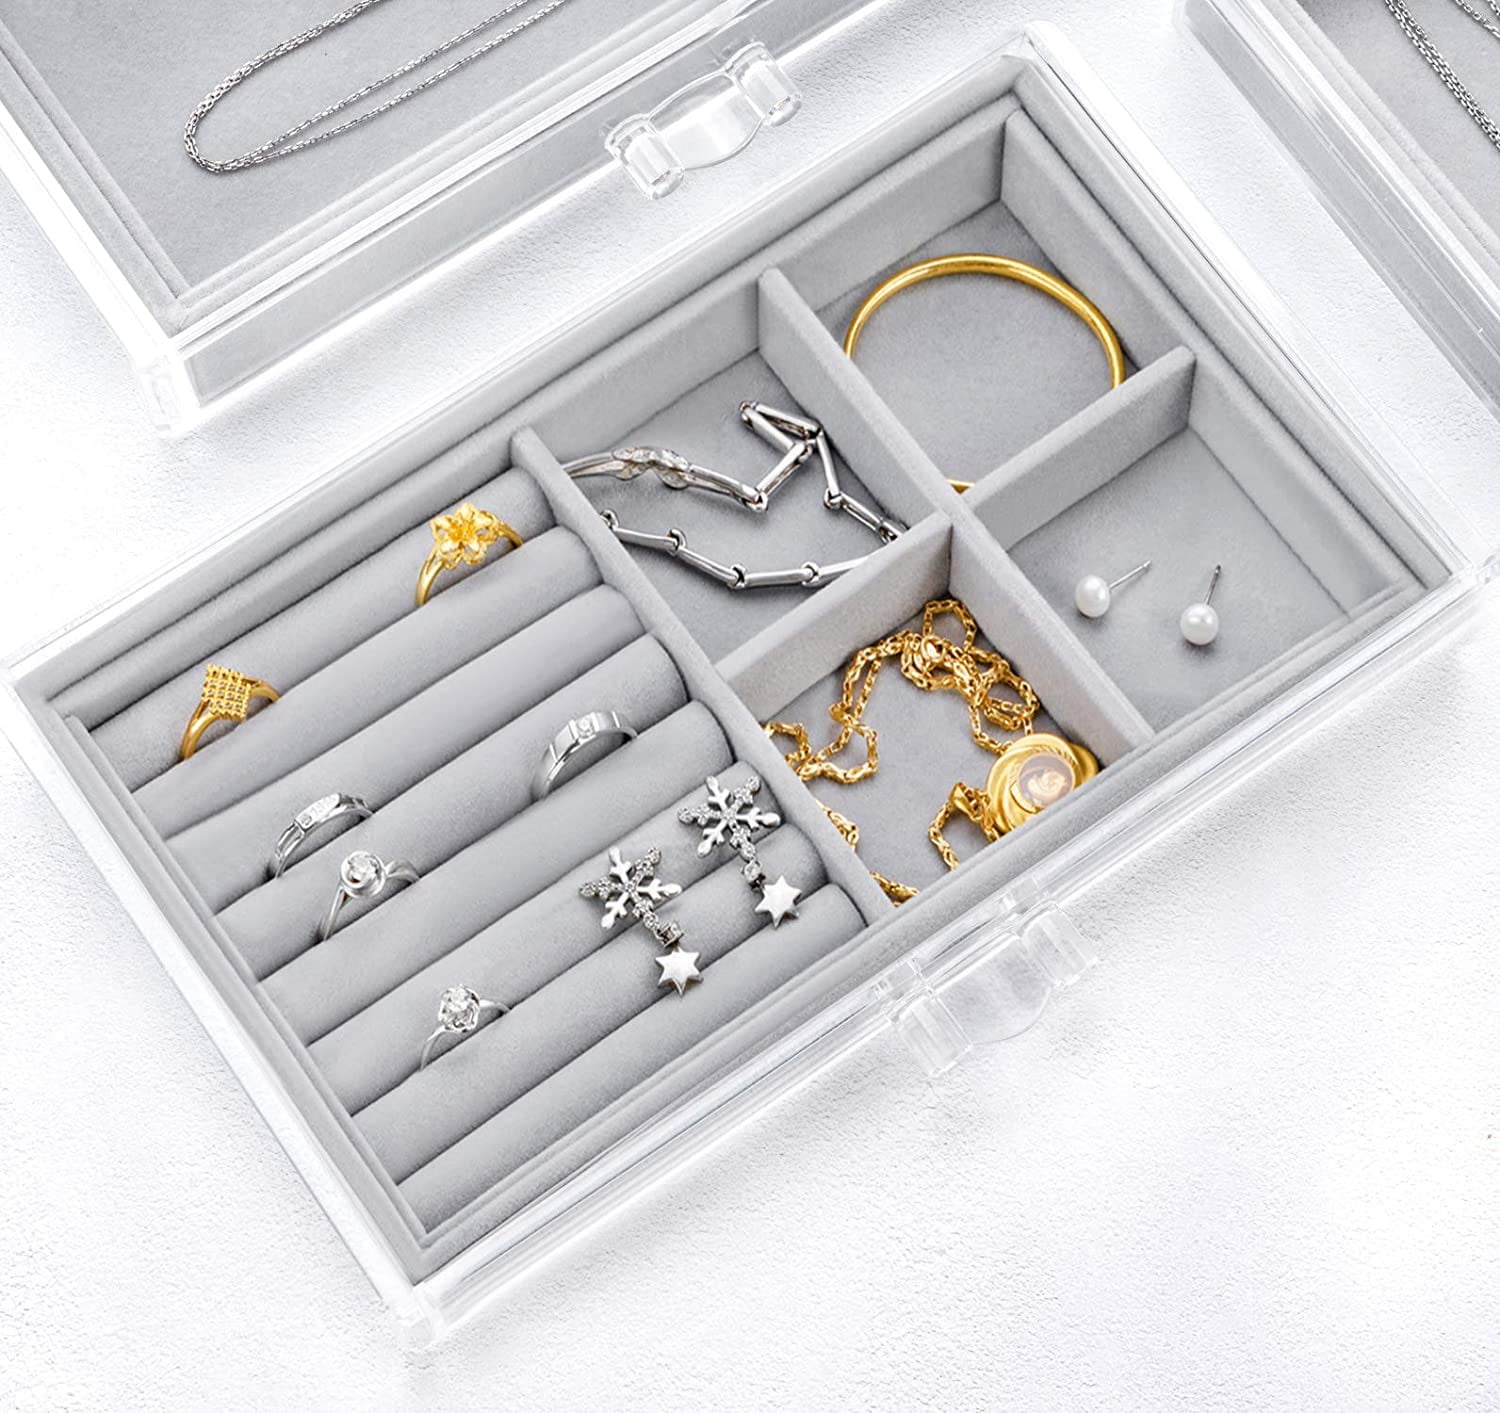 17Dec Acrylic Jewelry Holder Organizer Box with 5 Display Clear Earring  Holder Organizer Drawer,3 Velvet Jewelry Organizer Stand Tray.Jewelry Box